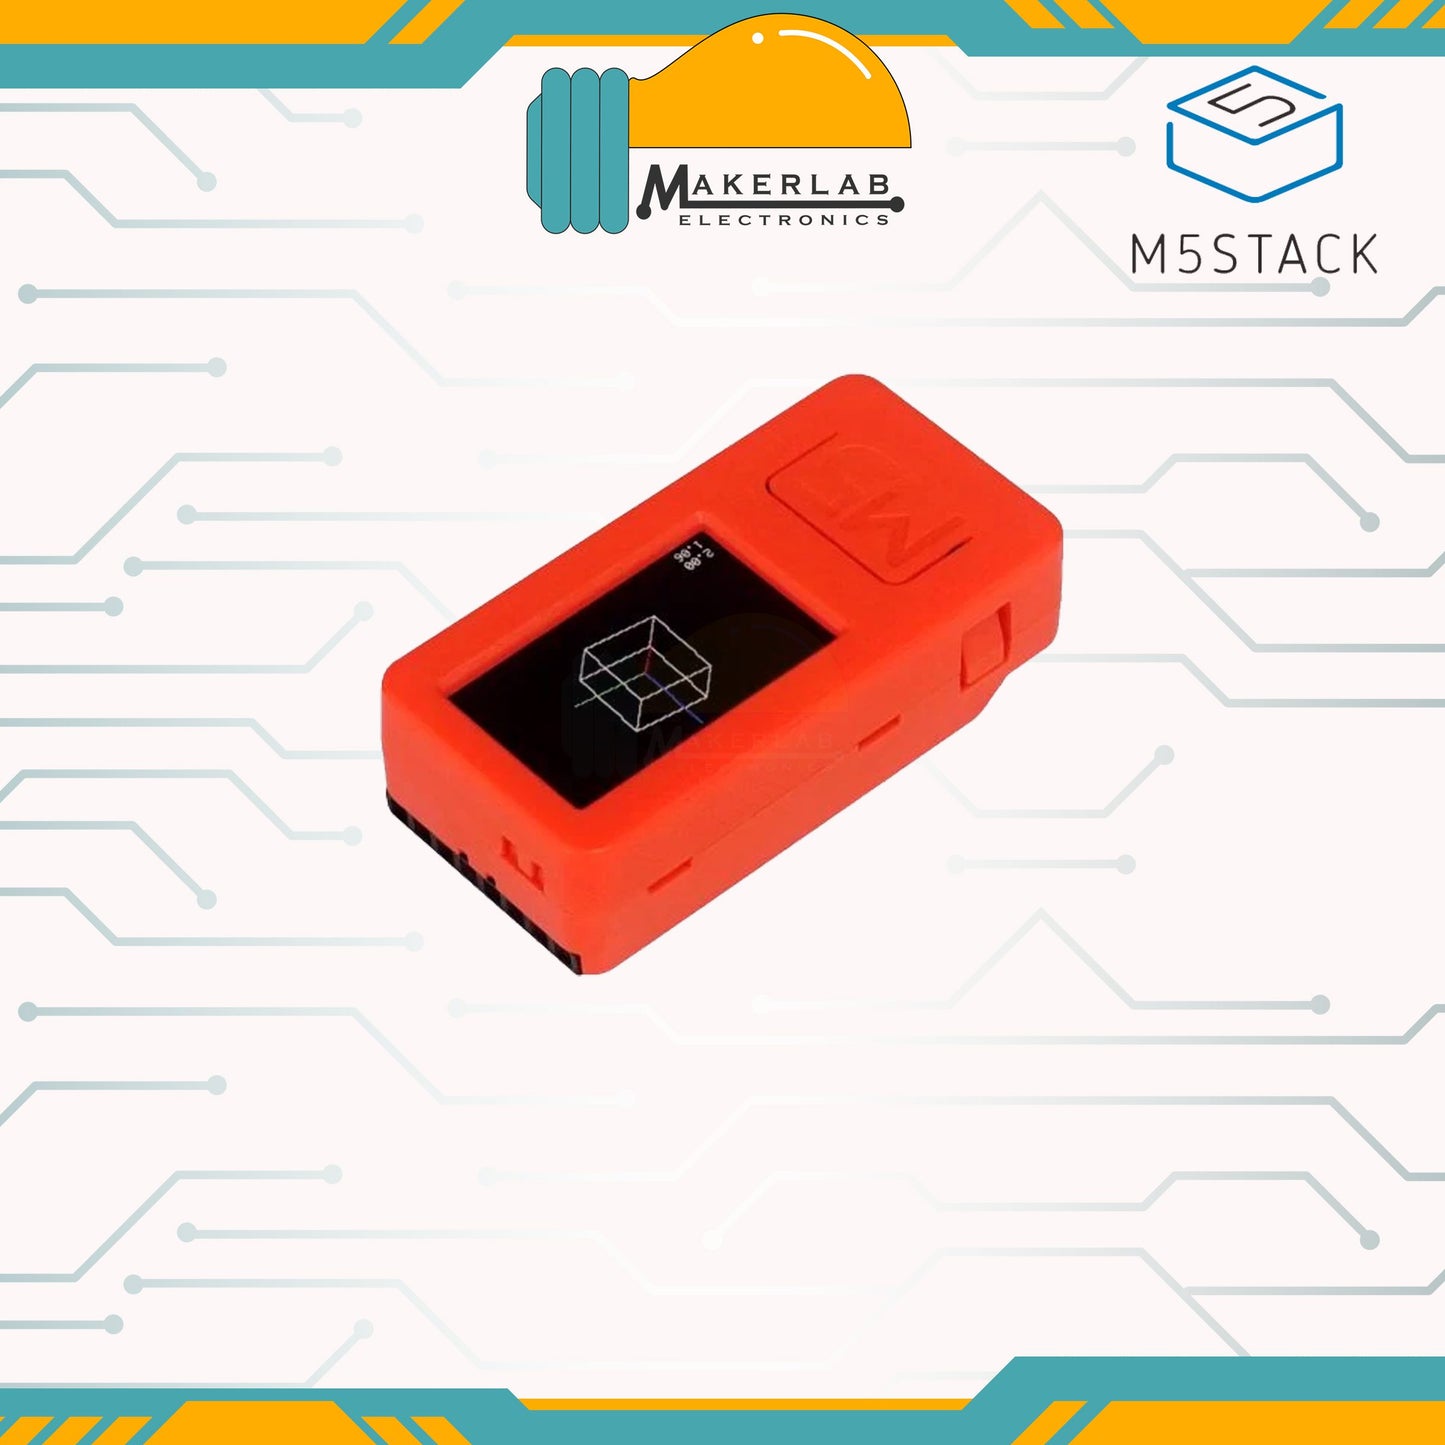 M5StickC Plus ESP32-PICO Mini IoT Development Kit